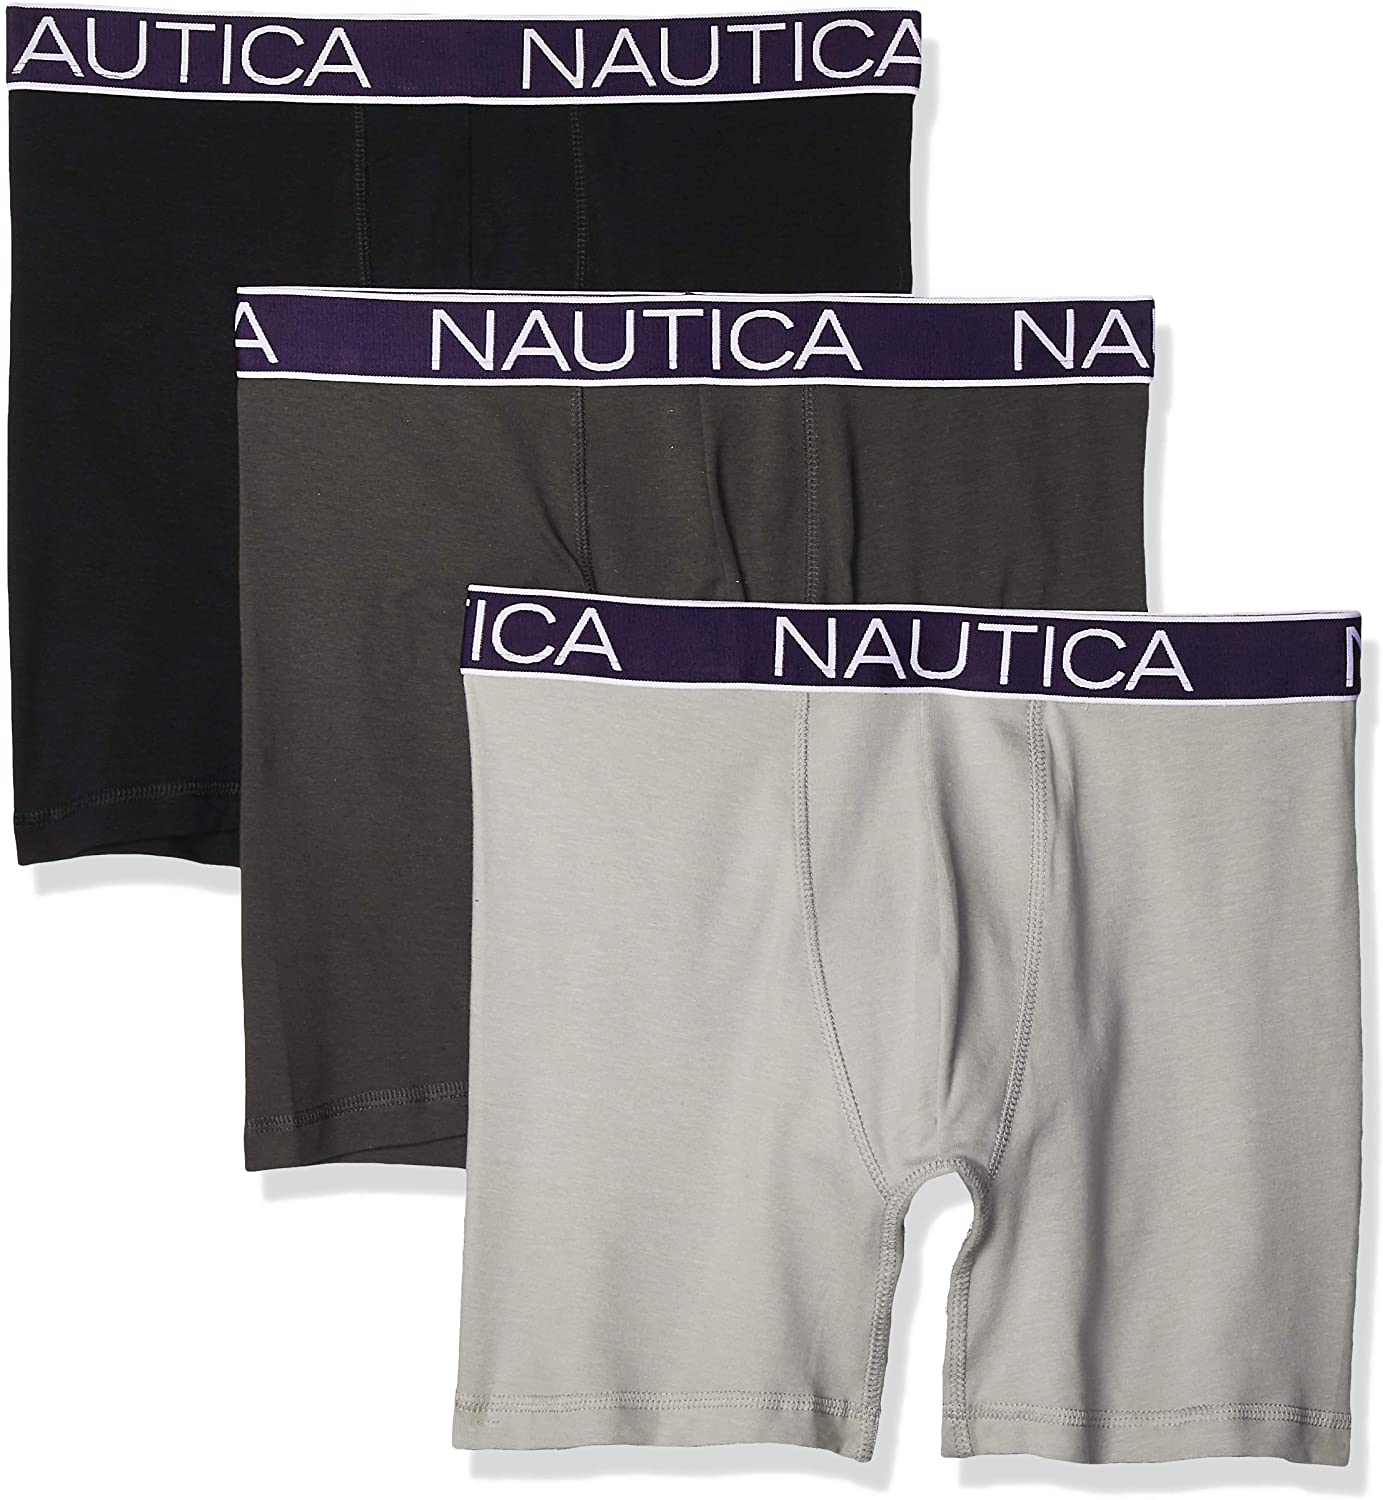  Nautica Men's Classic Underwear Cotton Stretch Trunk